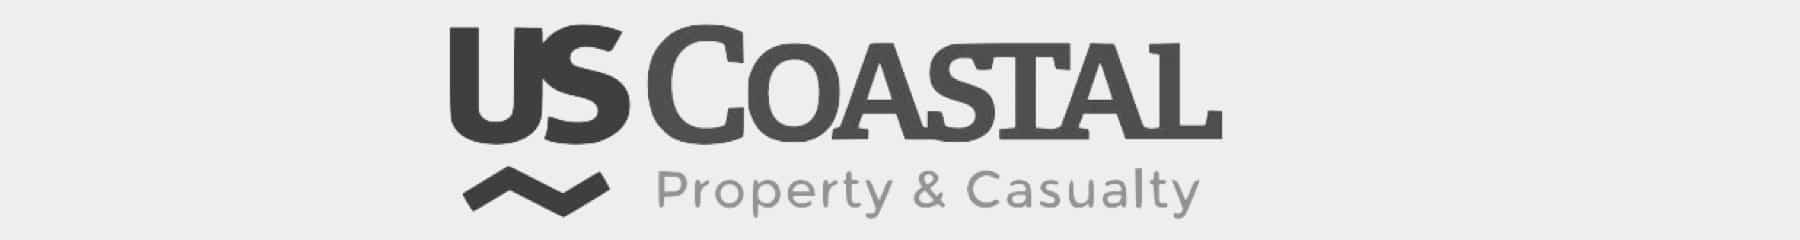 US Coastal Insurance